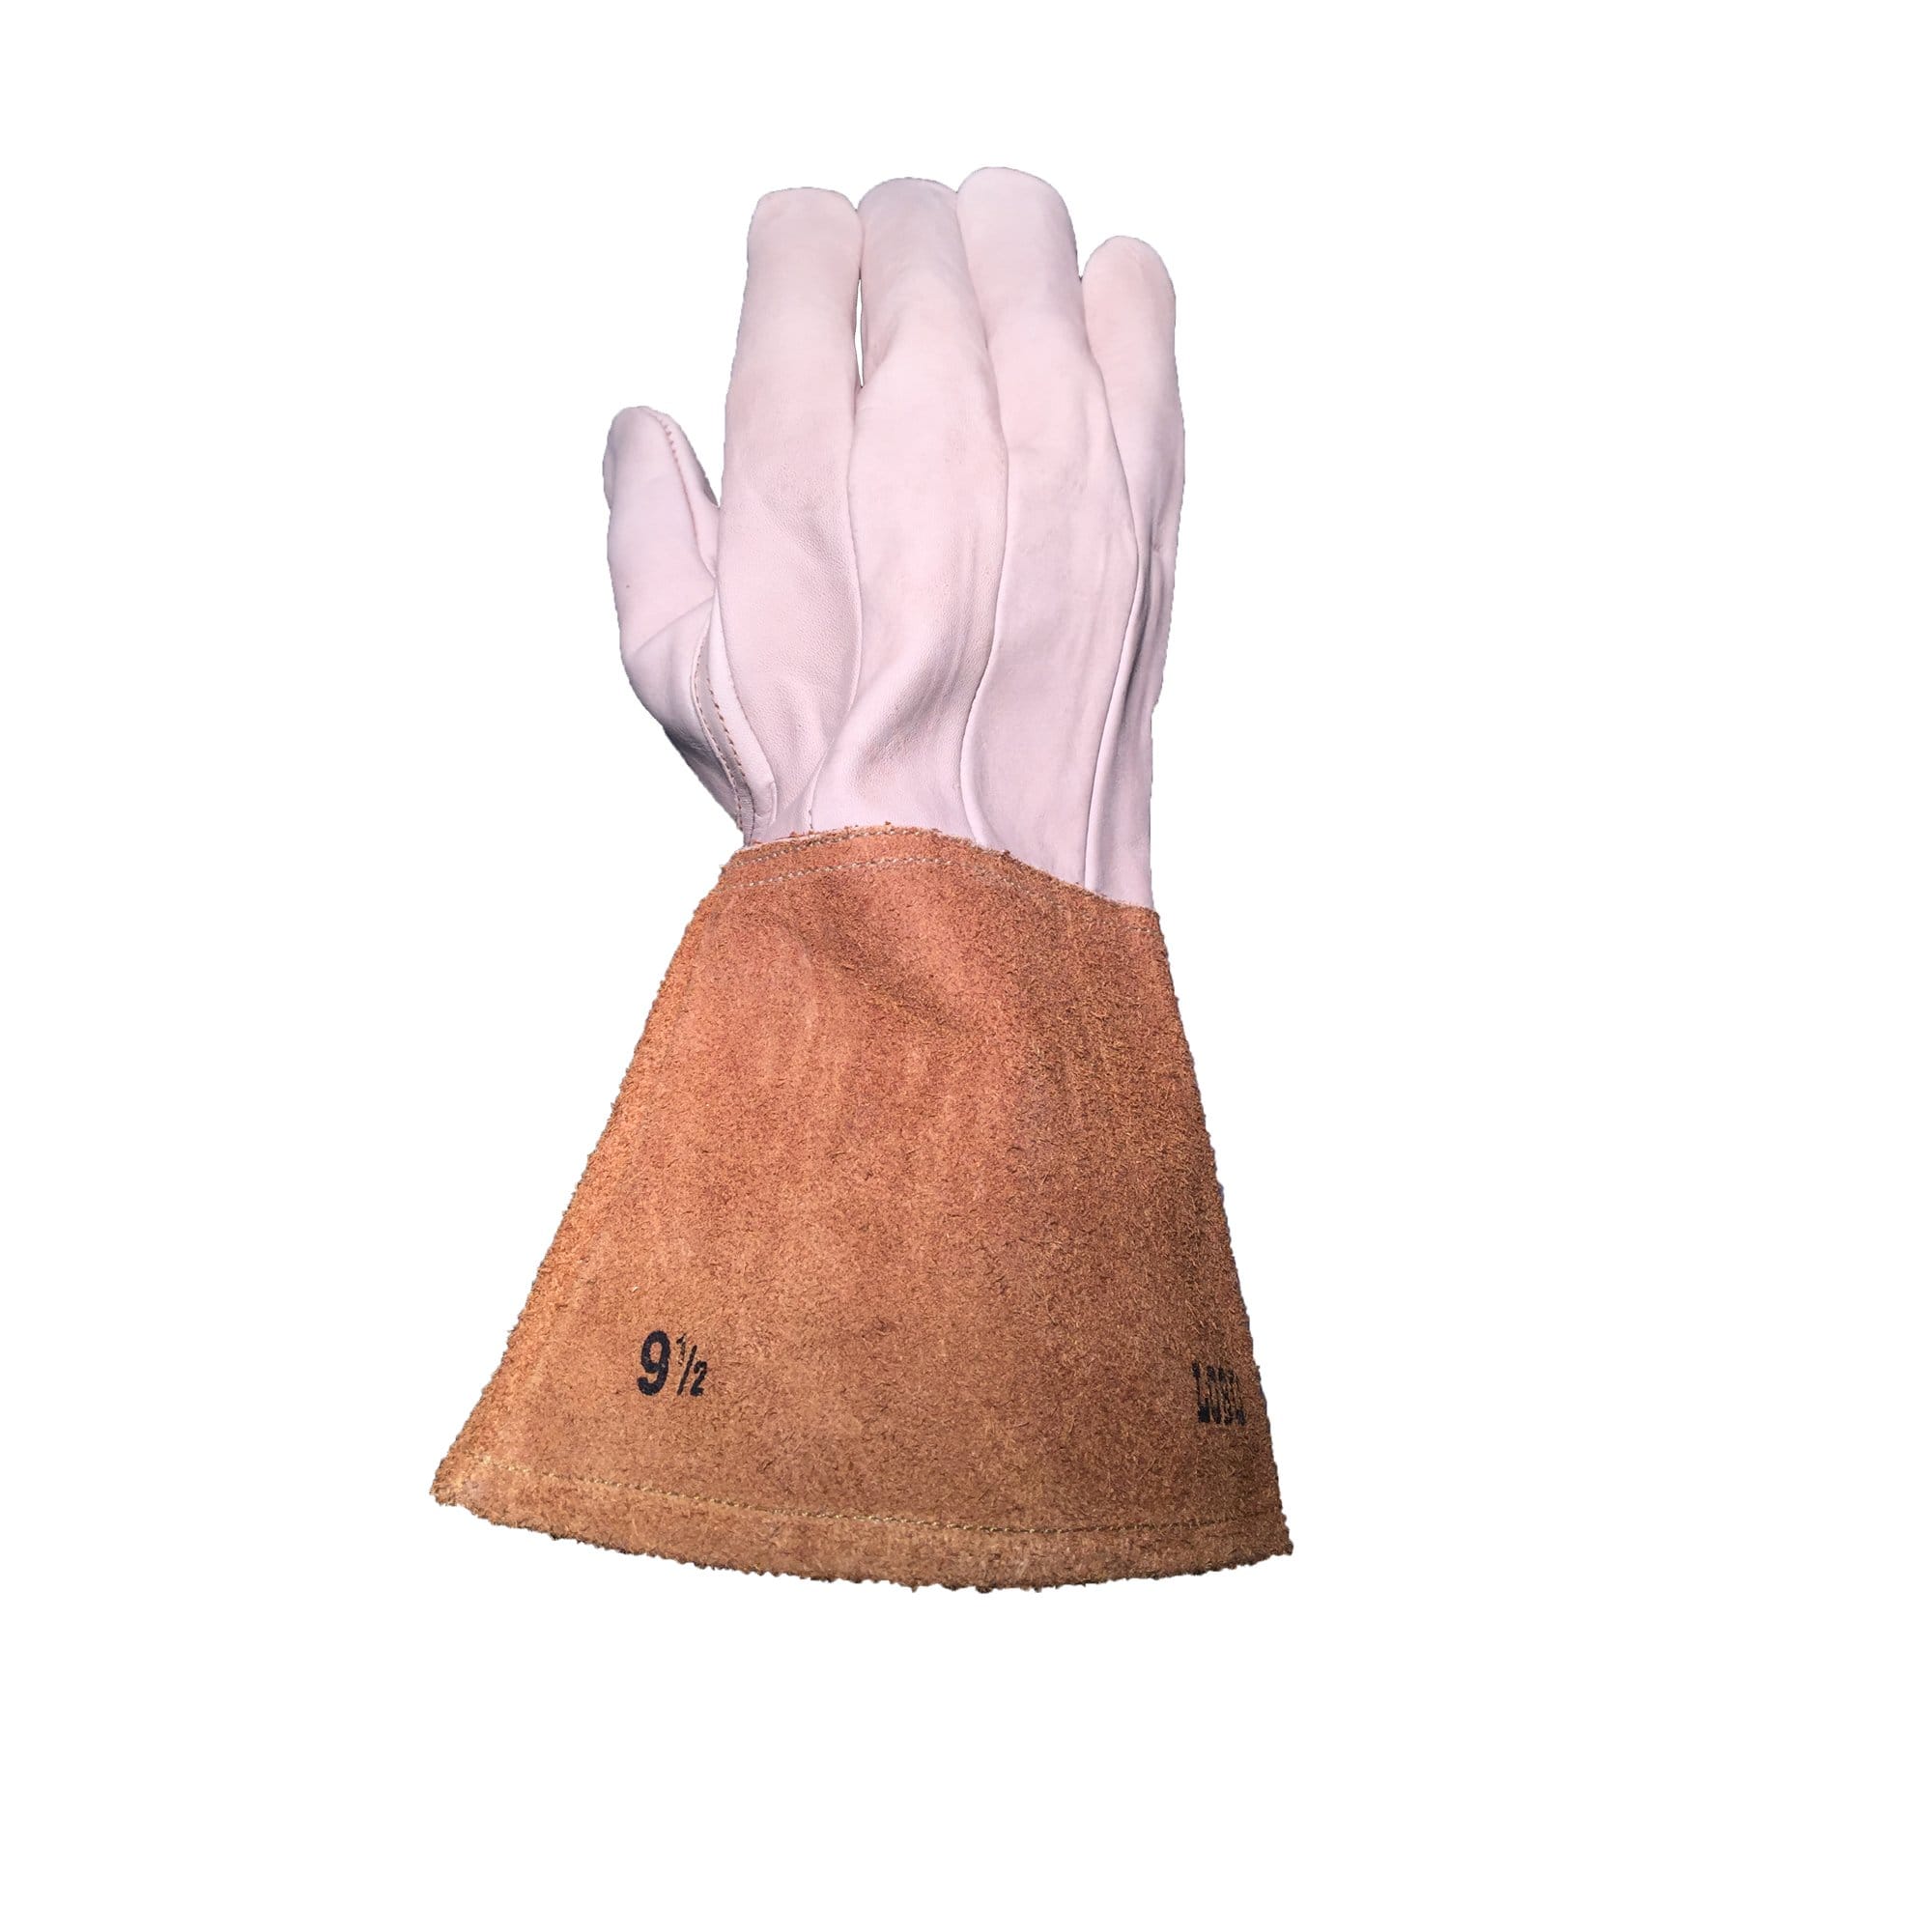 Lobo Lemon picking gloves - lemon harvesting gloves - gauntlet cuff - Thorn resistant - cowhide leather